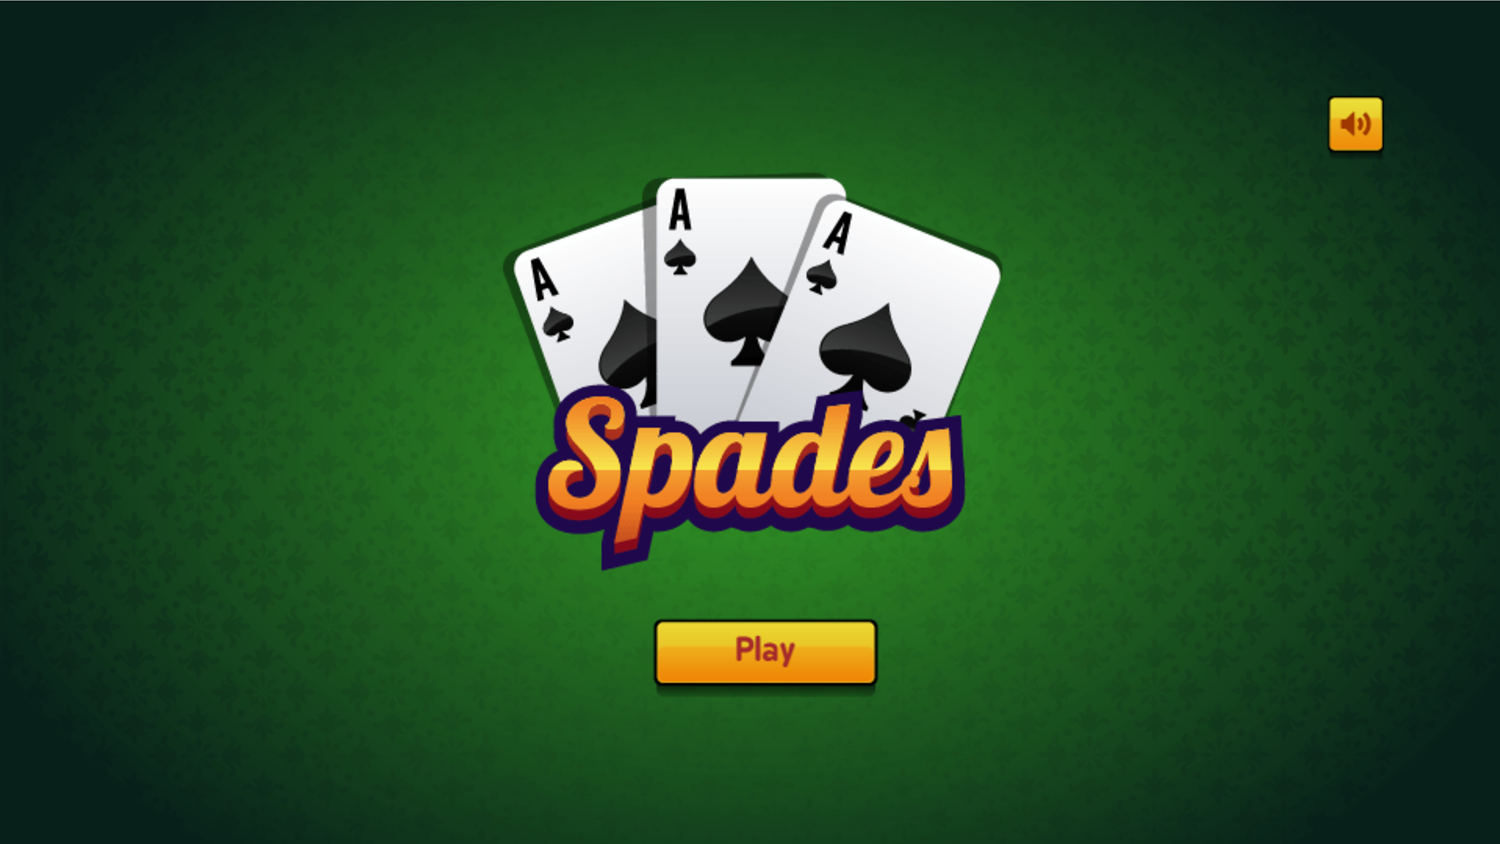 Spades Game Welcome Screen Screenshot.